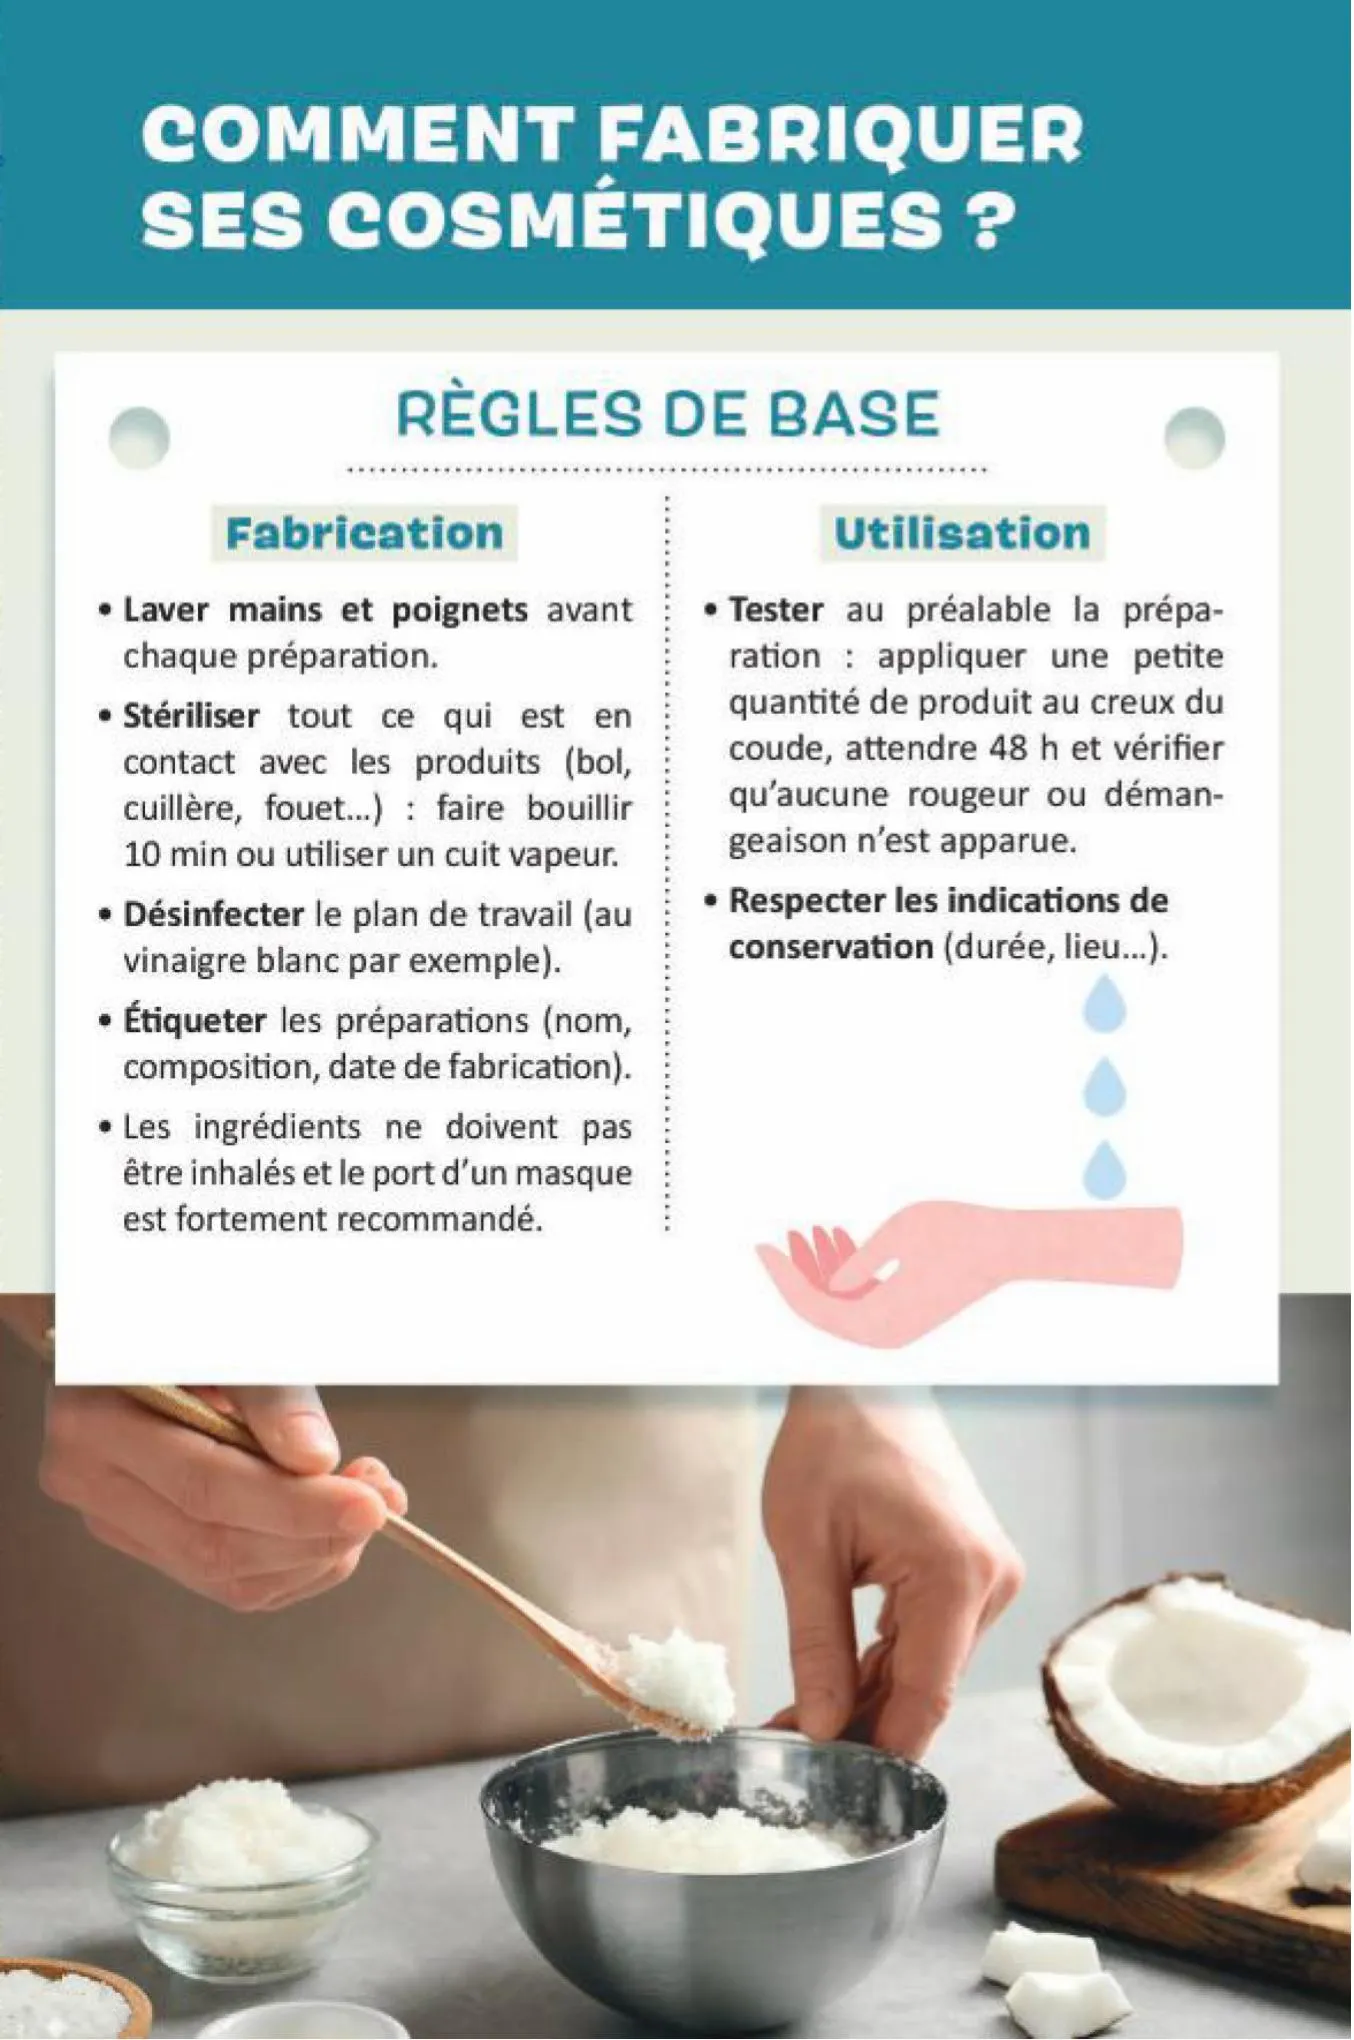 Catalogue Vos cosmétiques DIY selon Biocoop, page 00008